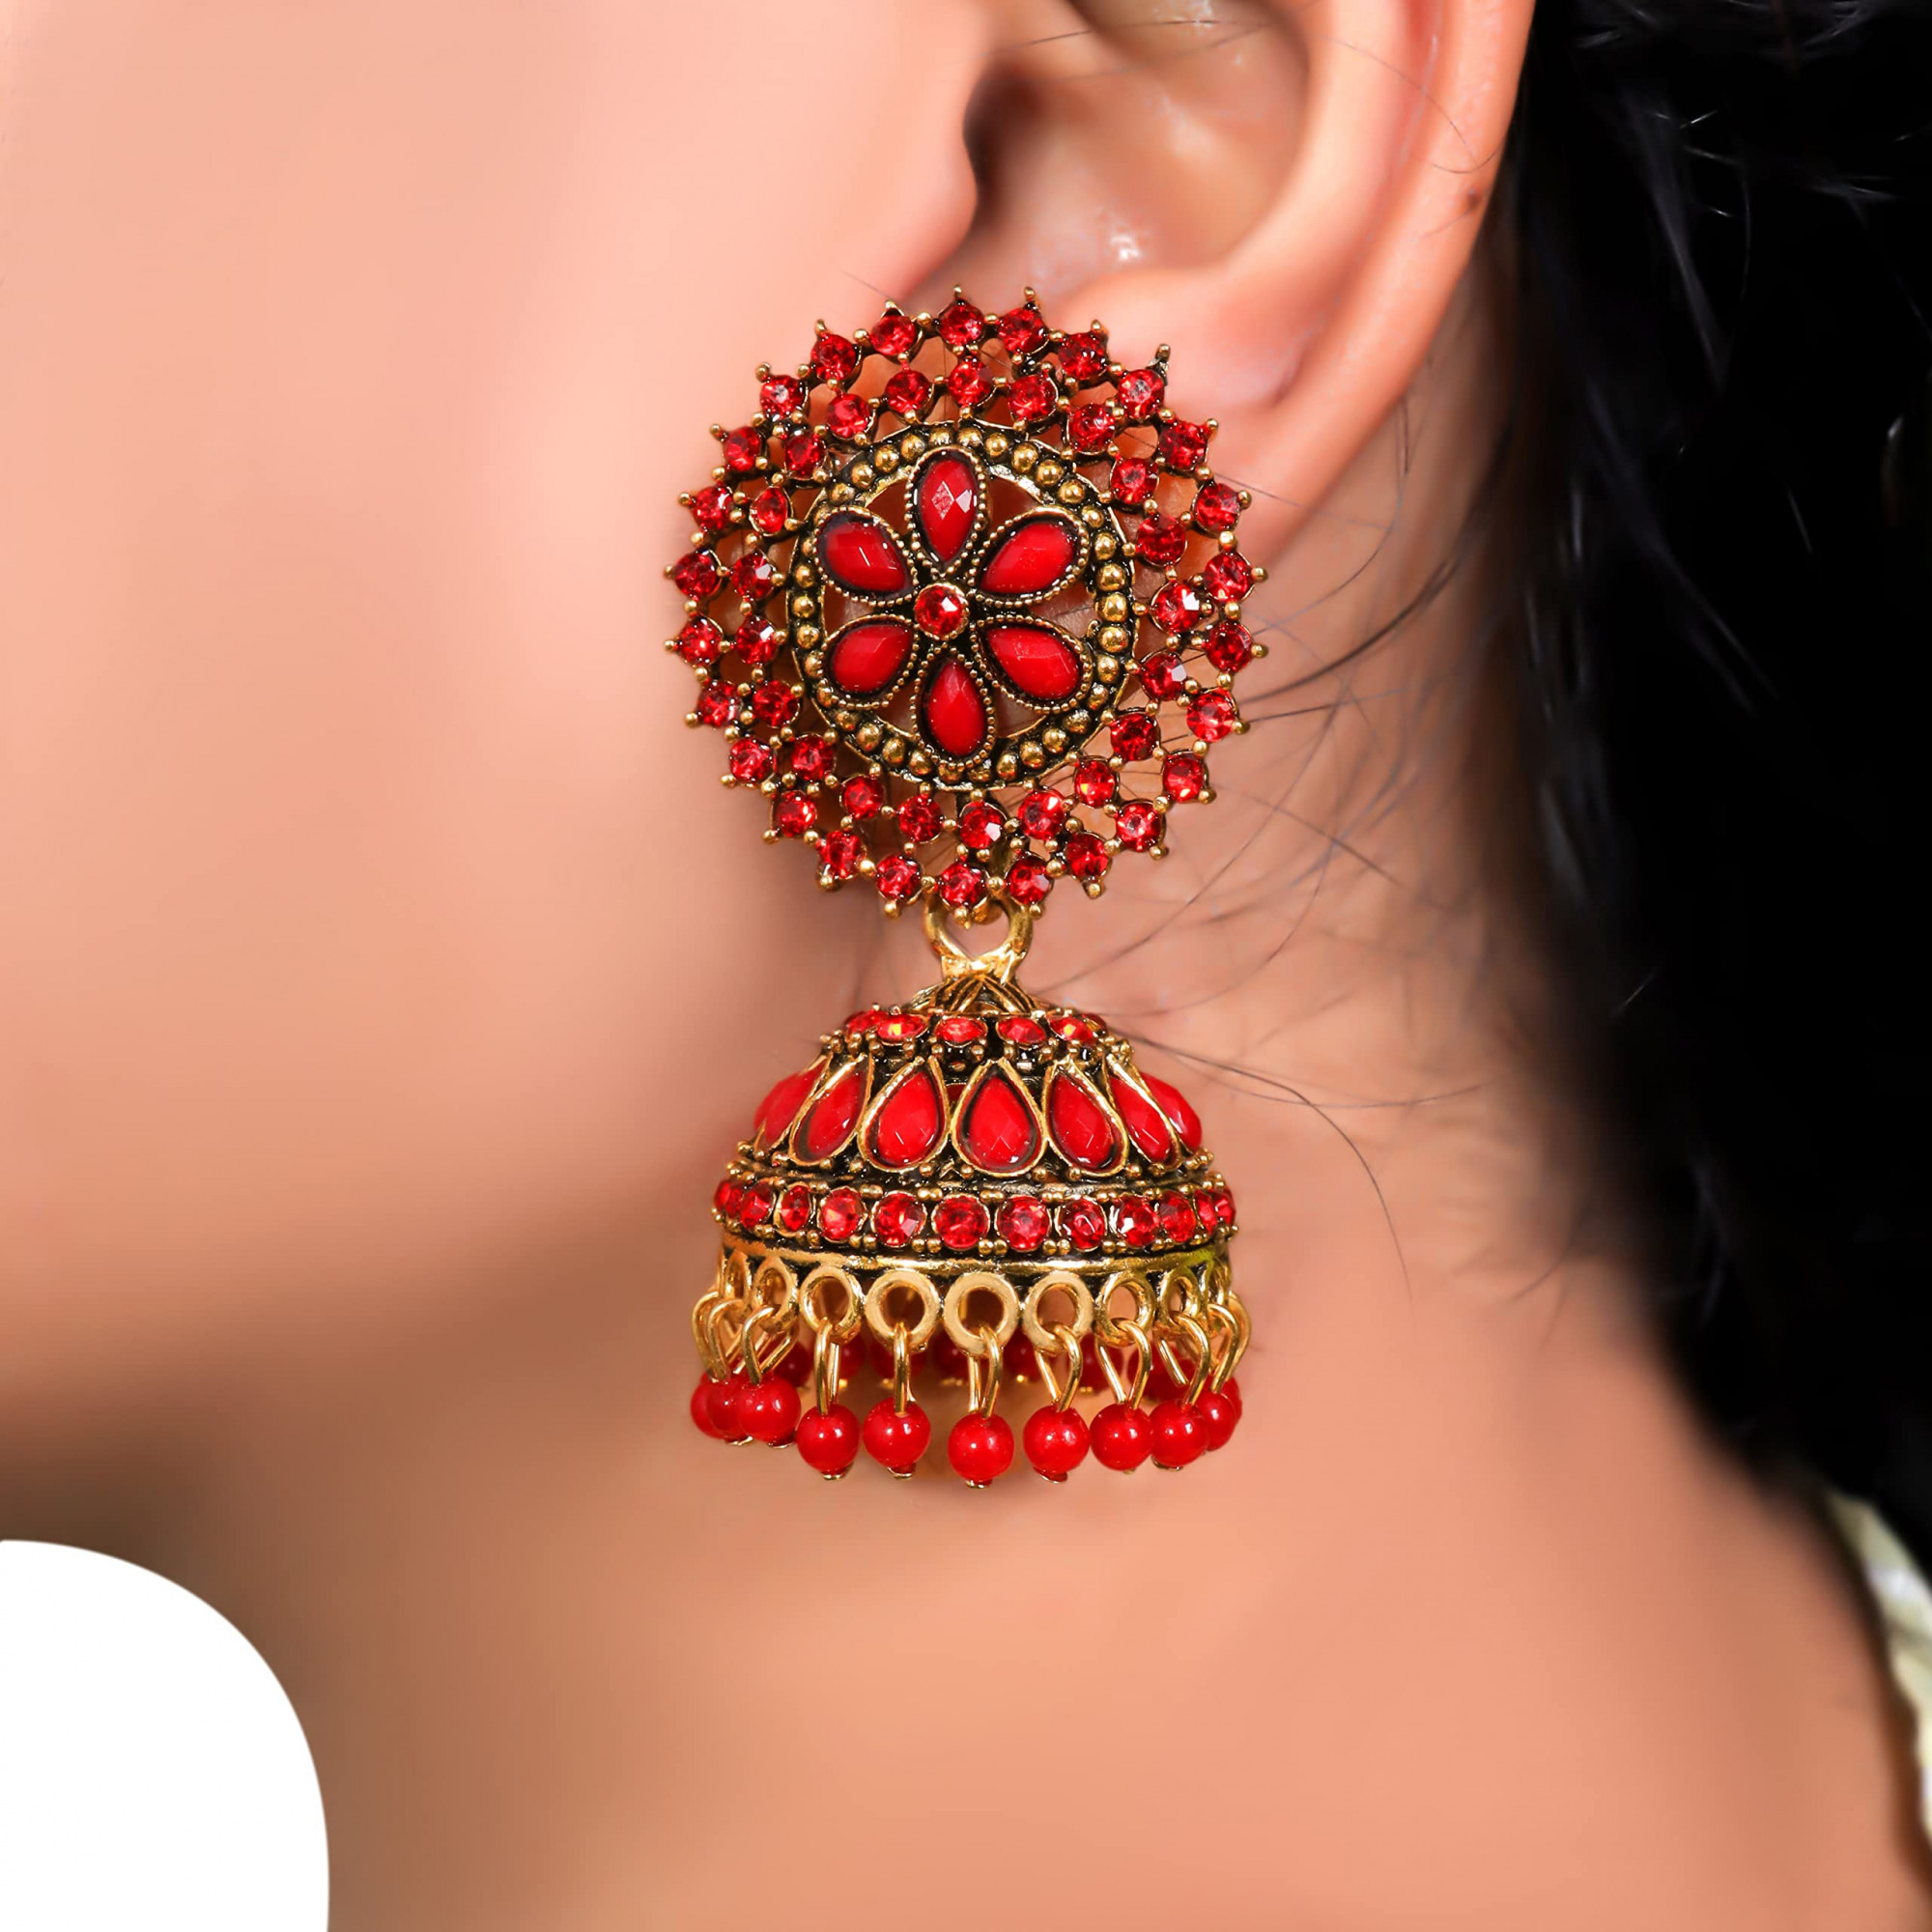 Buy Gold Earrings for Women by Crunchy Fashion Online | Ajio.com